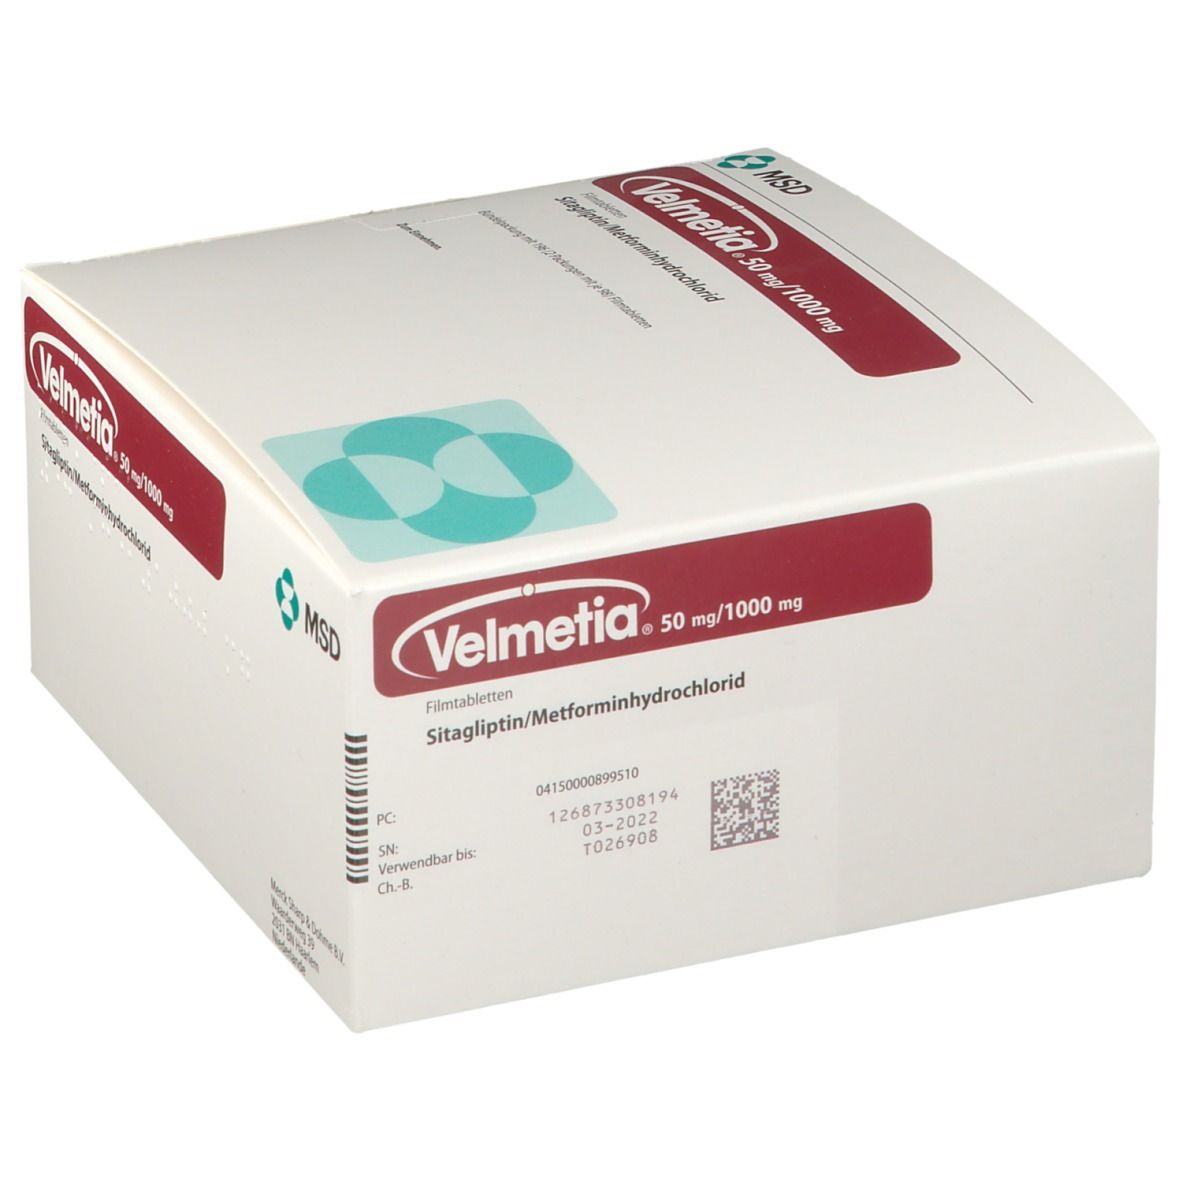 Velmetia® 50 mg/1000 mg